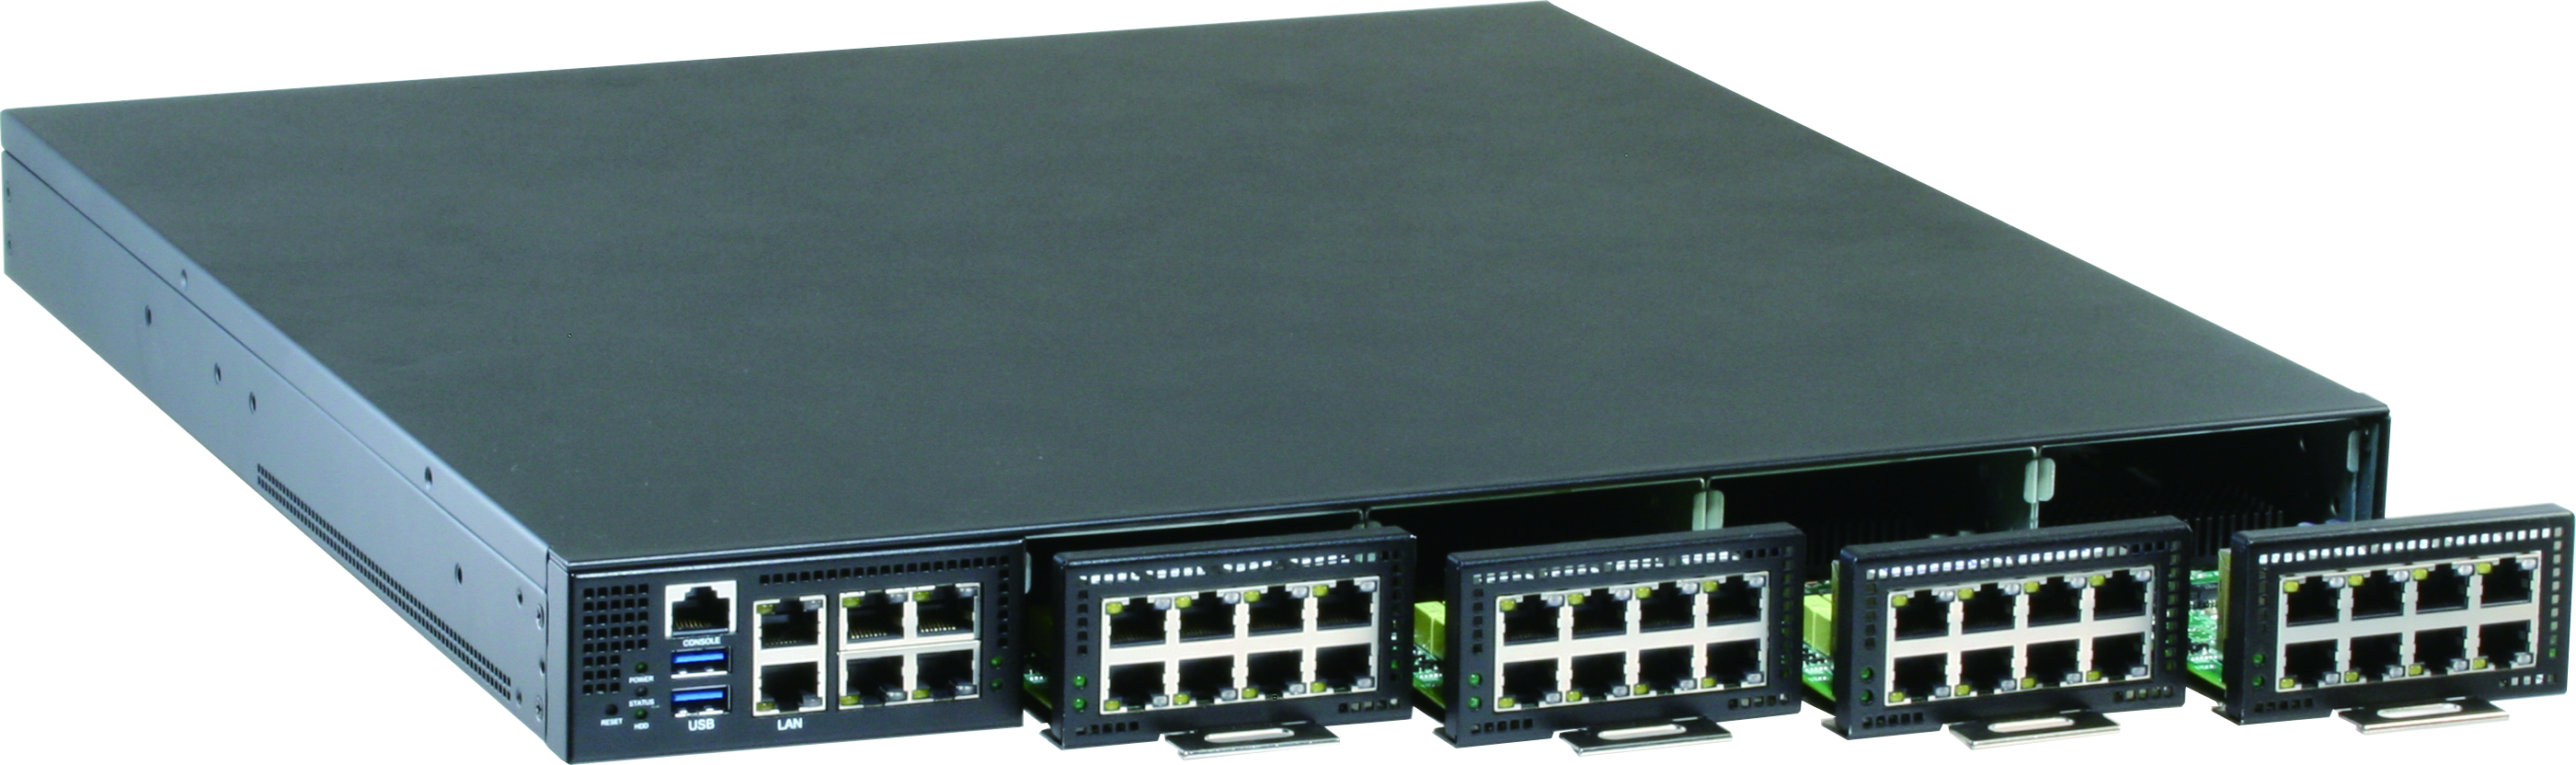 High performance 1U rack mount Network security appliance